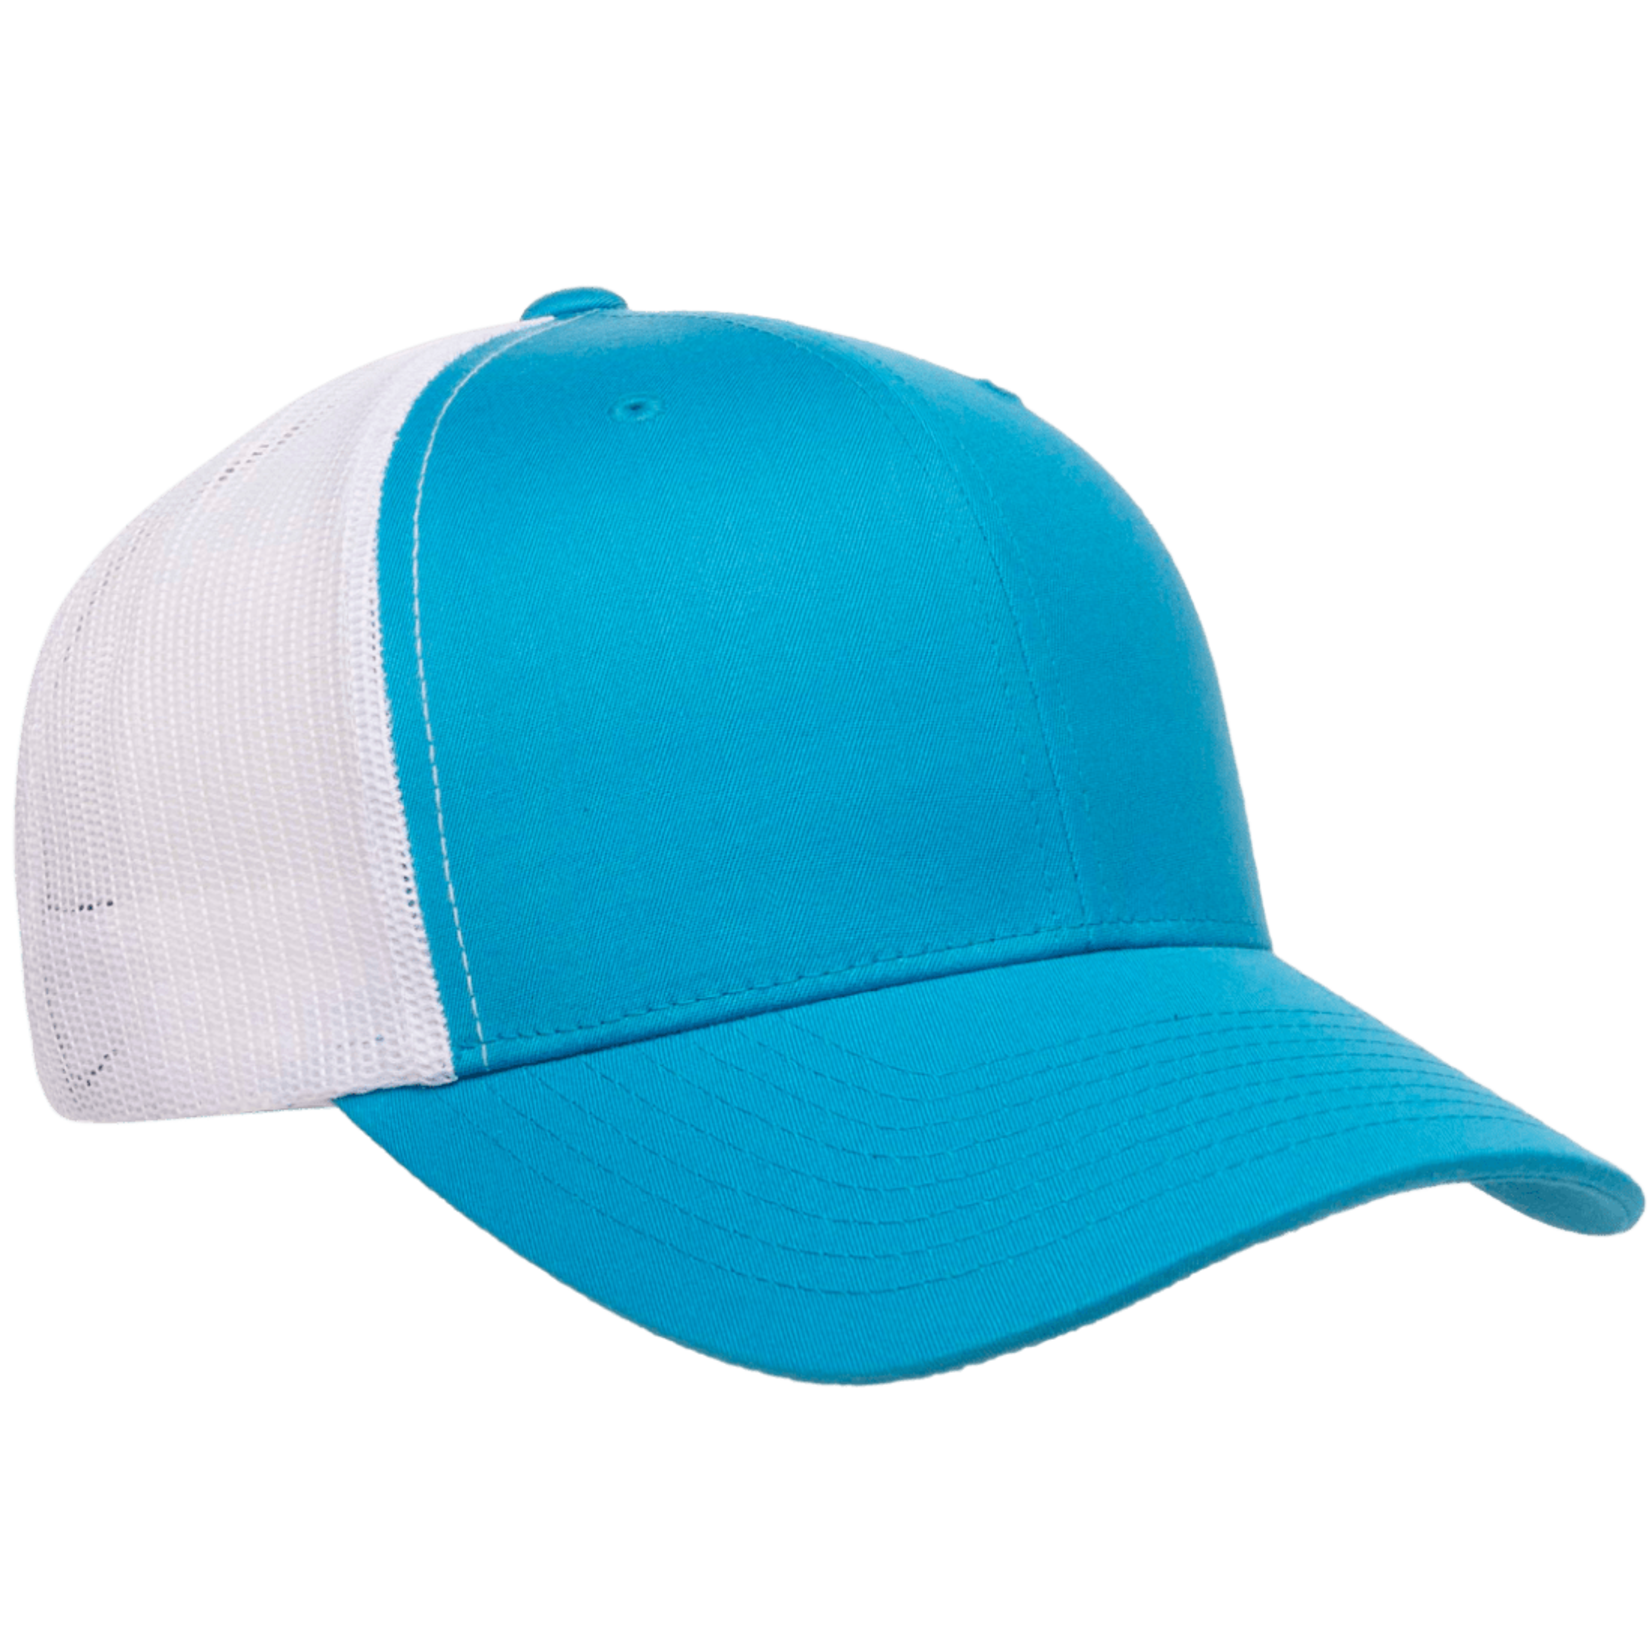 Flexfit Flexfit 6606T 2-Tone Snapback Trucker Hat - Turquoise/White